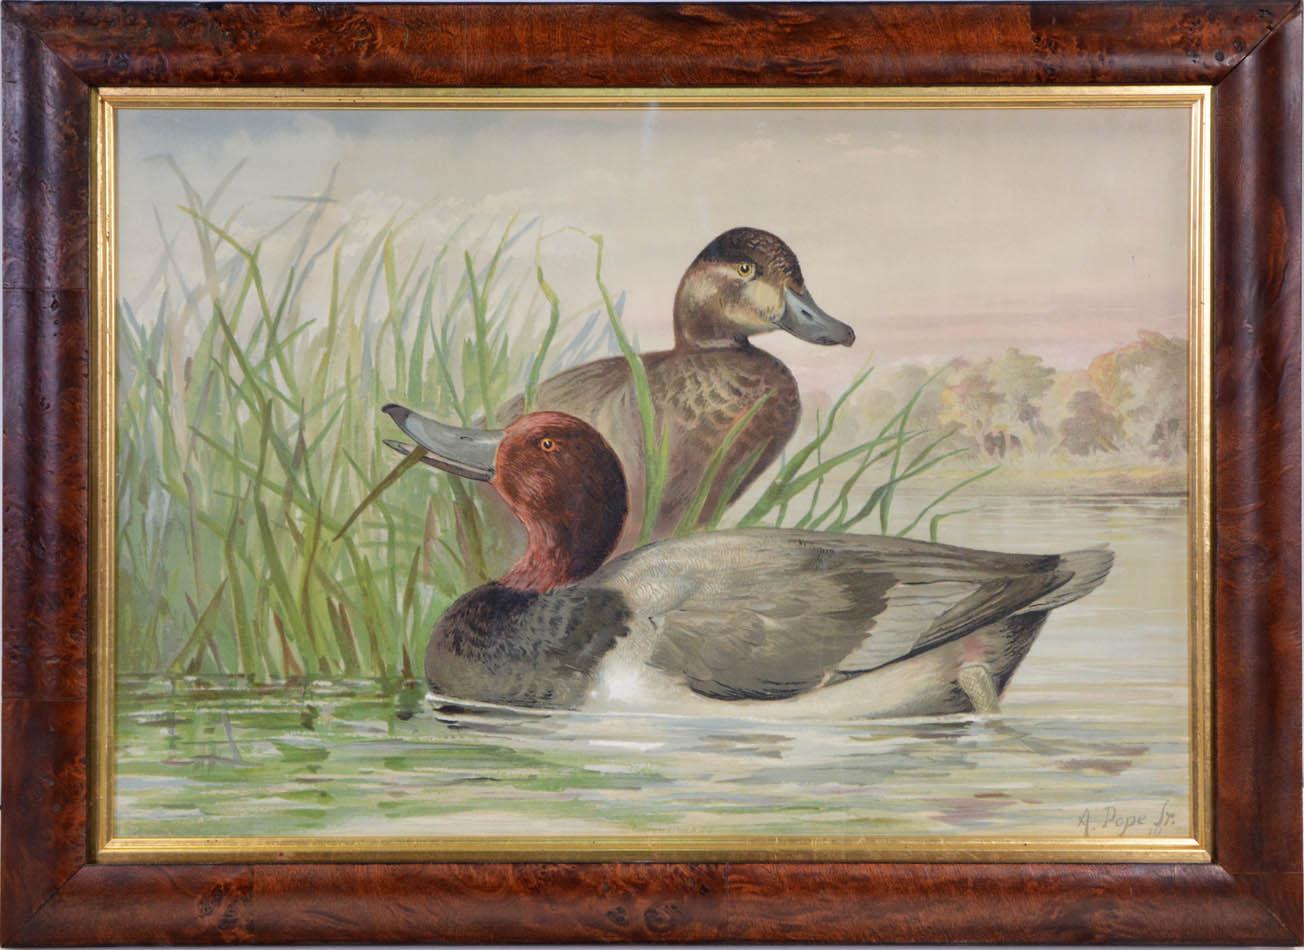 Alexander Pope Jr. Animal Print - Group of Six Water Fowl